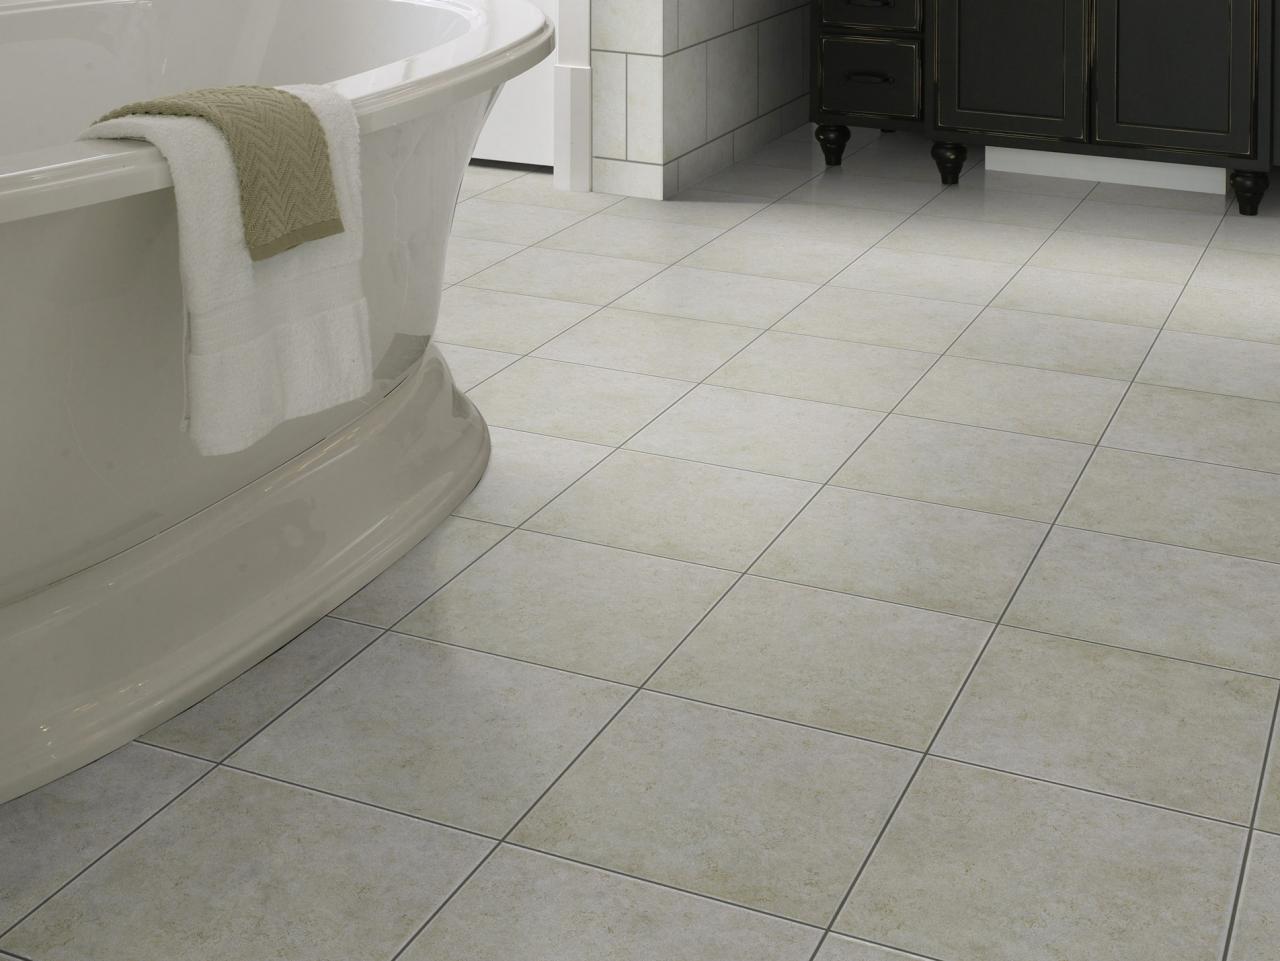 Why Homeowners Love Ceramic Tile, Bathroom Porcelain Tile